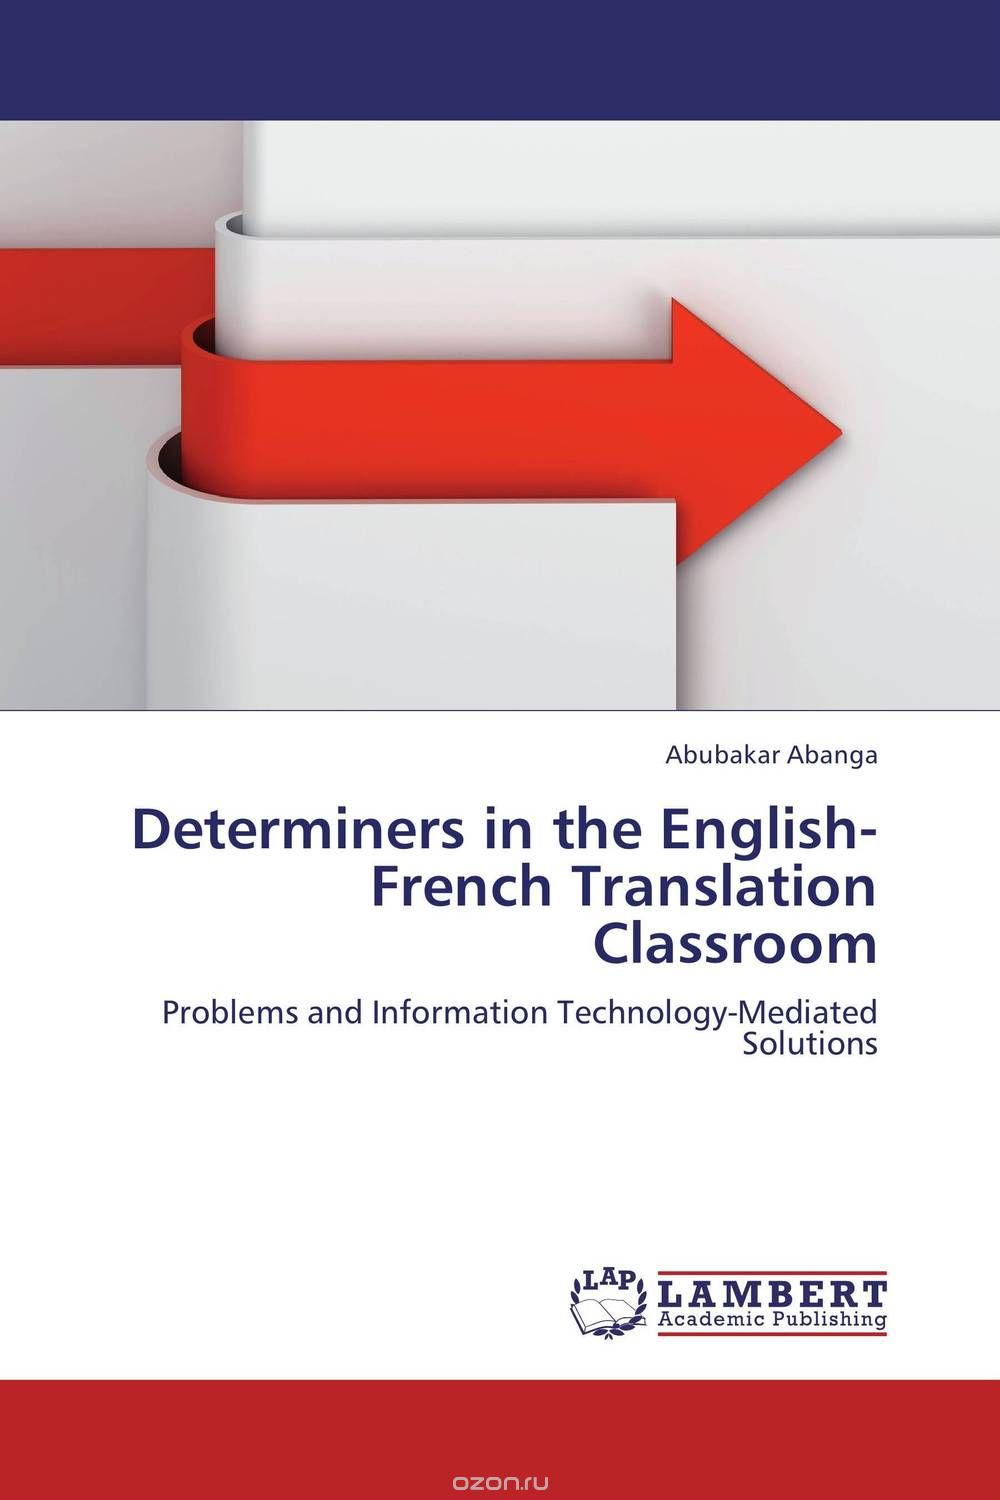 Скачать книгу "Determiners in the English-French Translation Classroom"